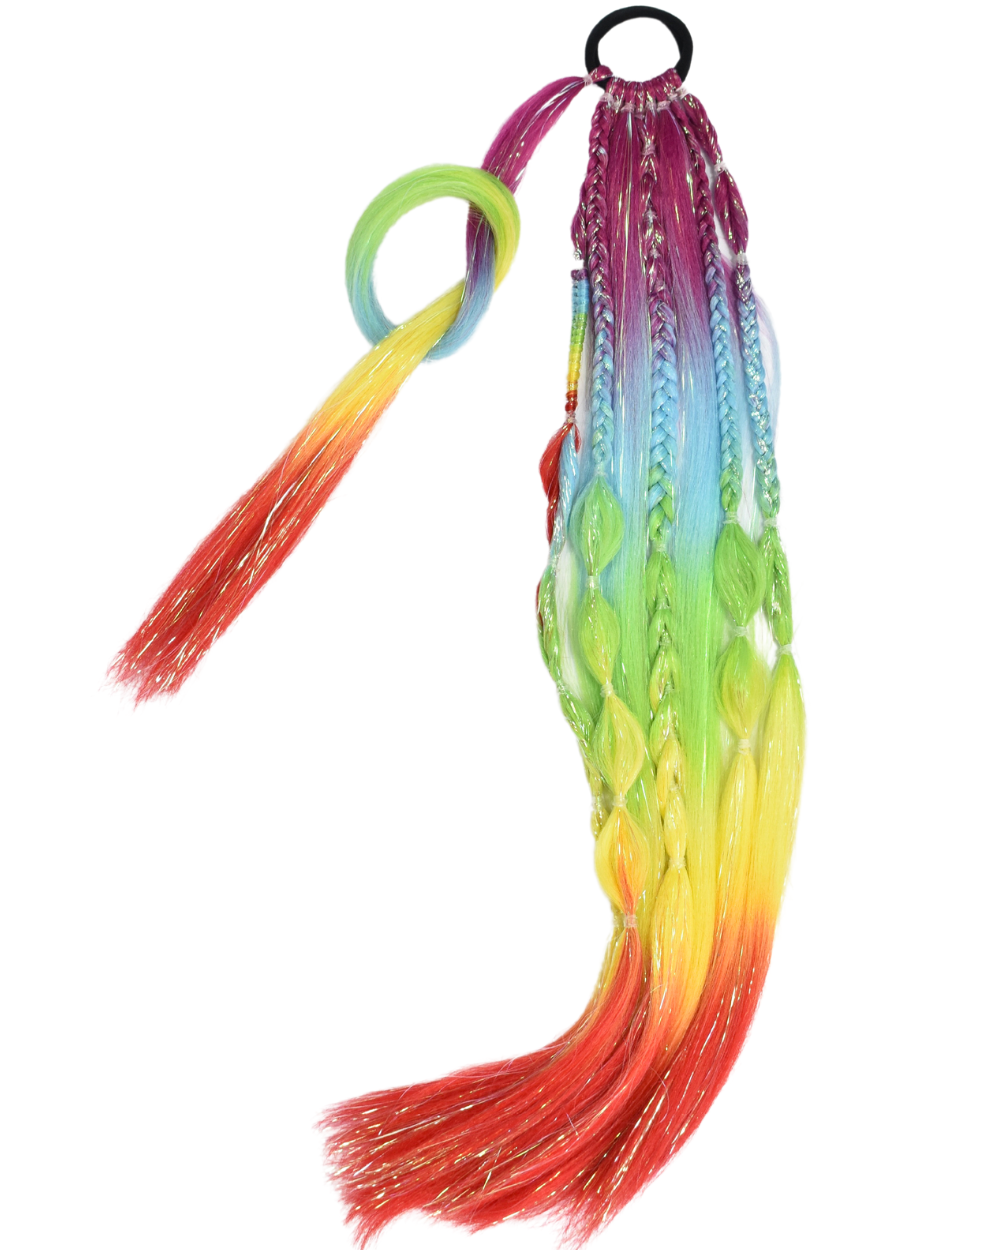 Rainbow Crystal - Ombré Braided Ponytail Extension - Lunautics Ponytail Hair Extension